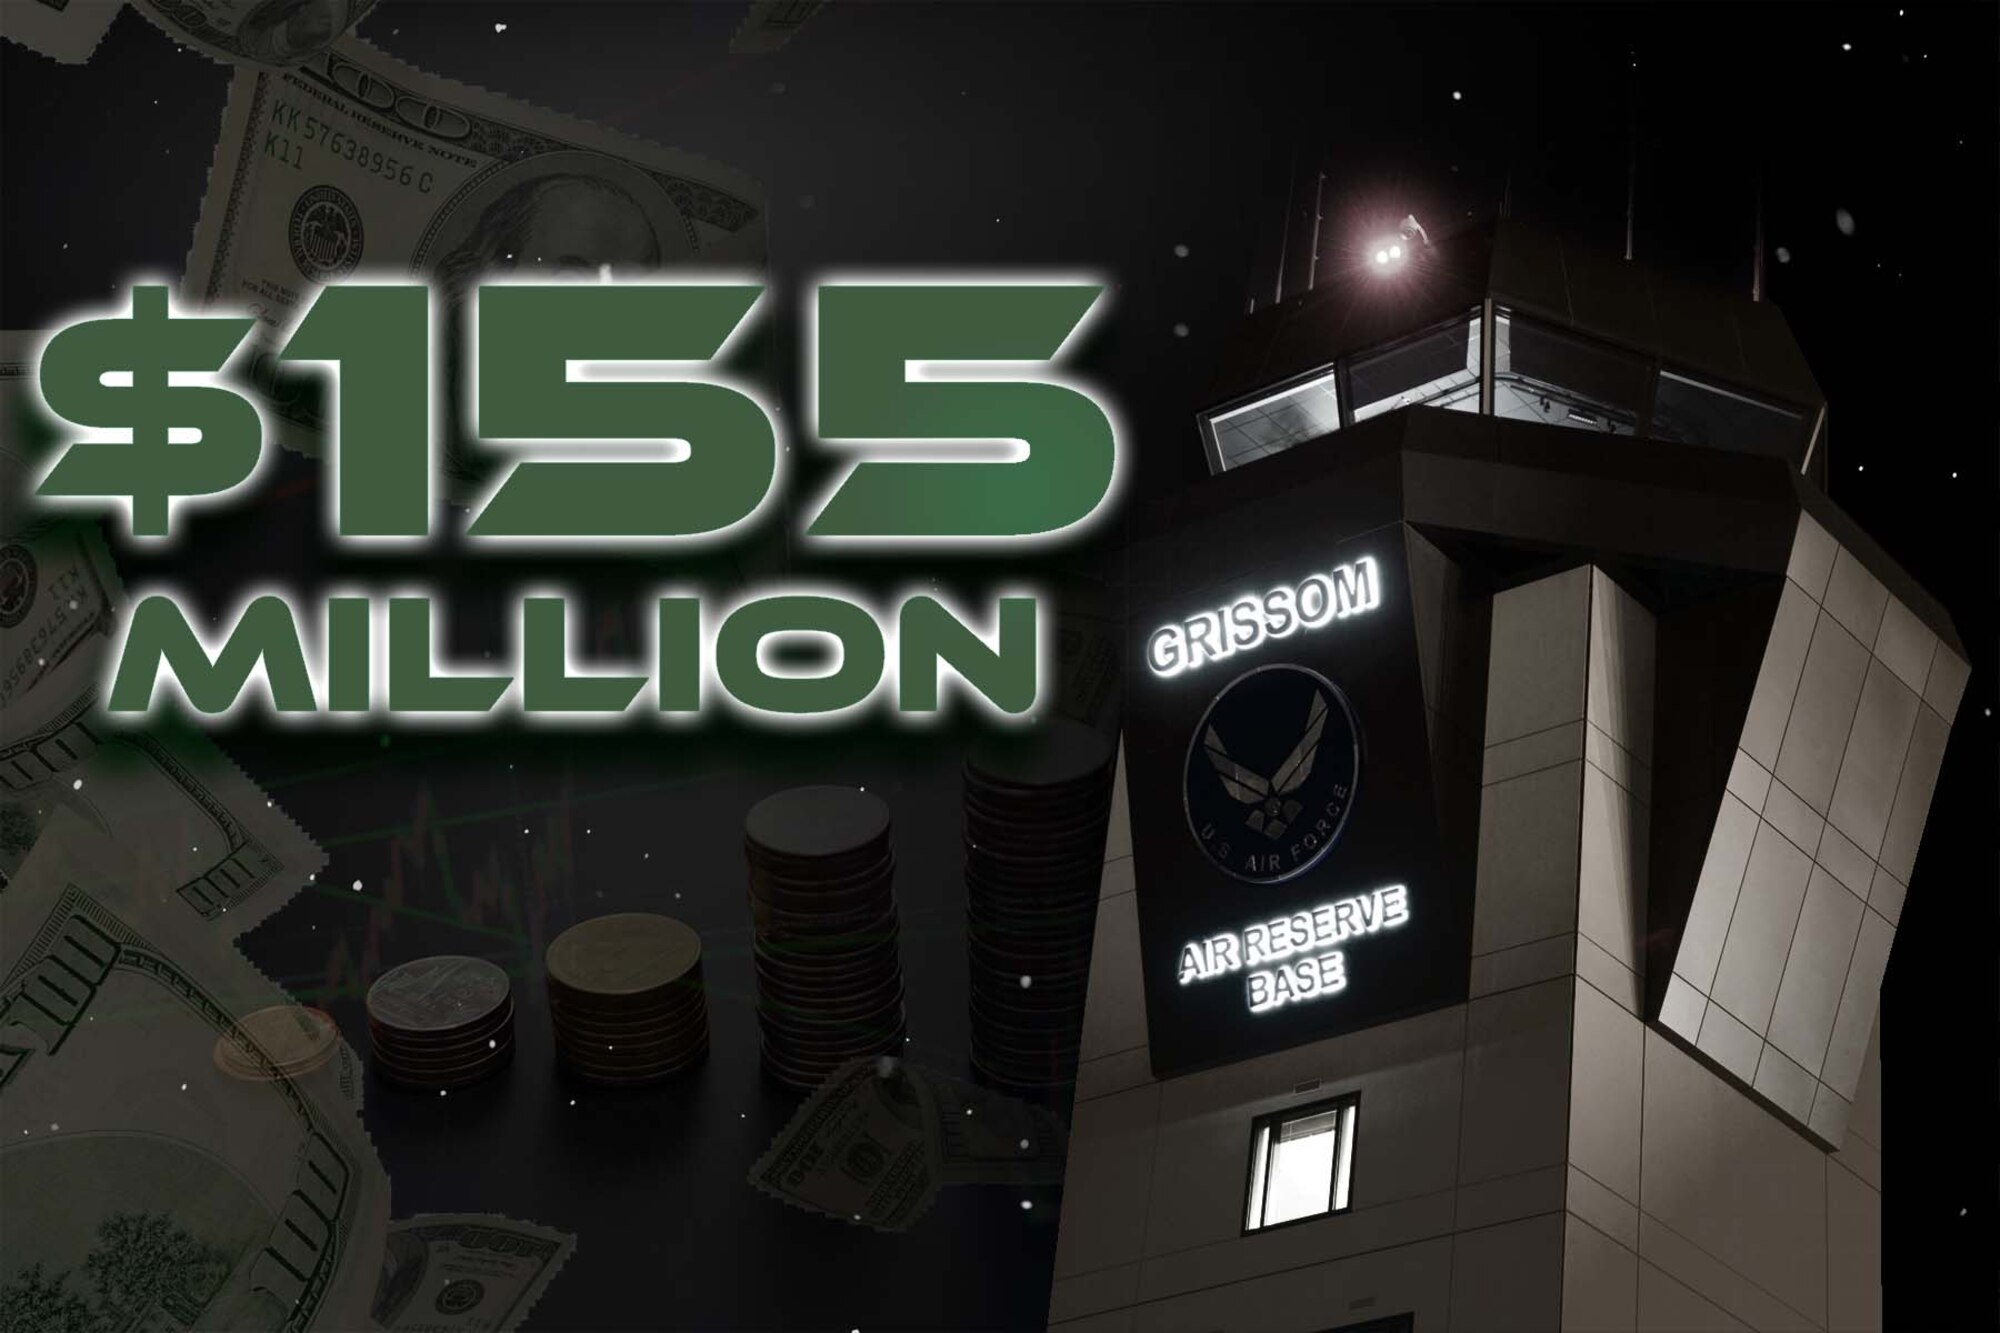 Grissom's economic impact for FY21 was $155 million.